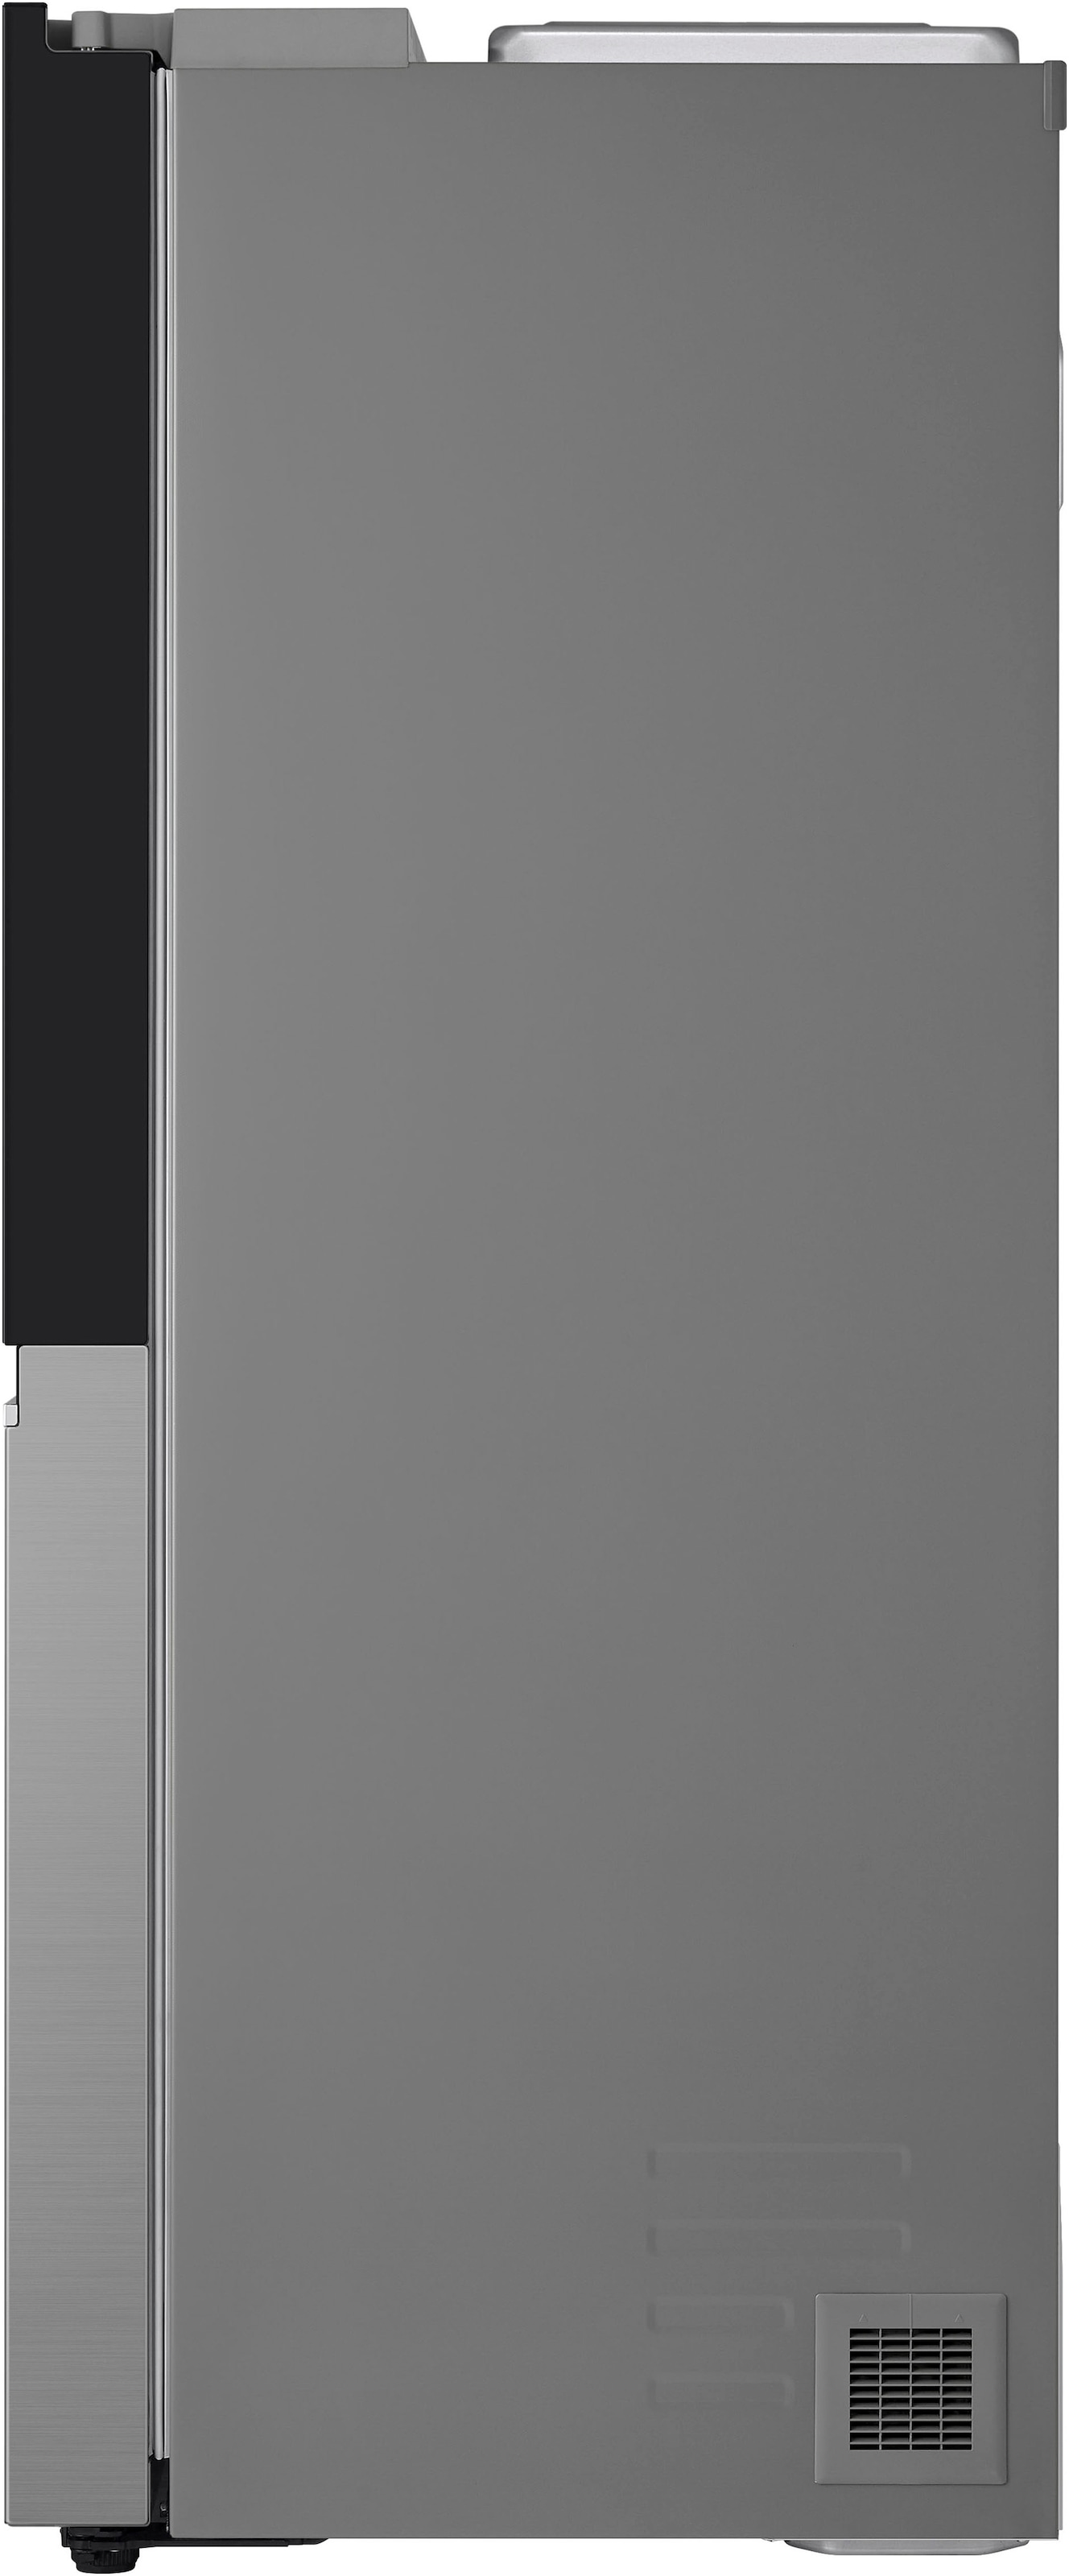 LG Side-by-Side, GSGB71PYLL, 179 cm hoch, 91,3 cm breit, 4 Jahre Garantie inklusive